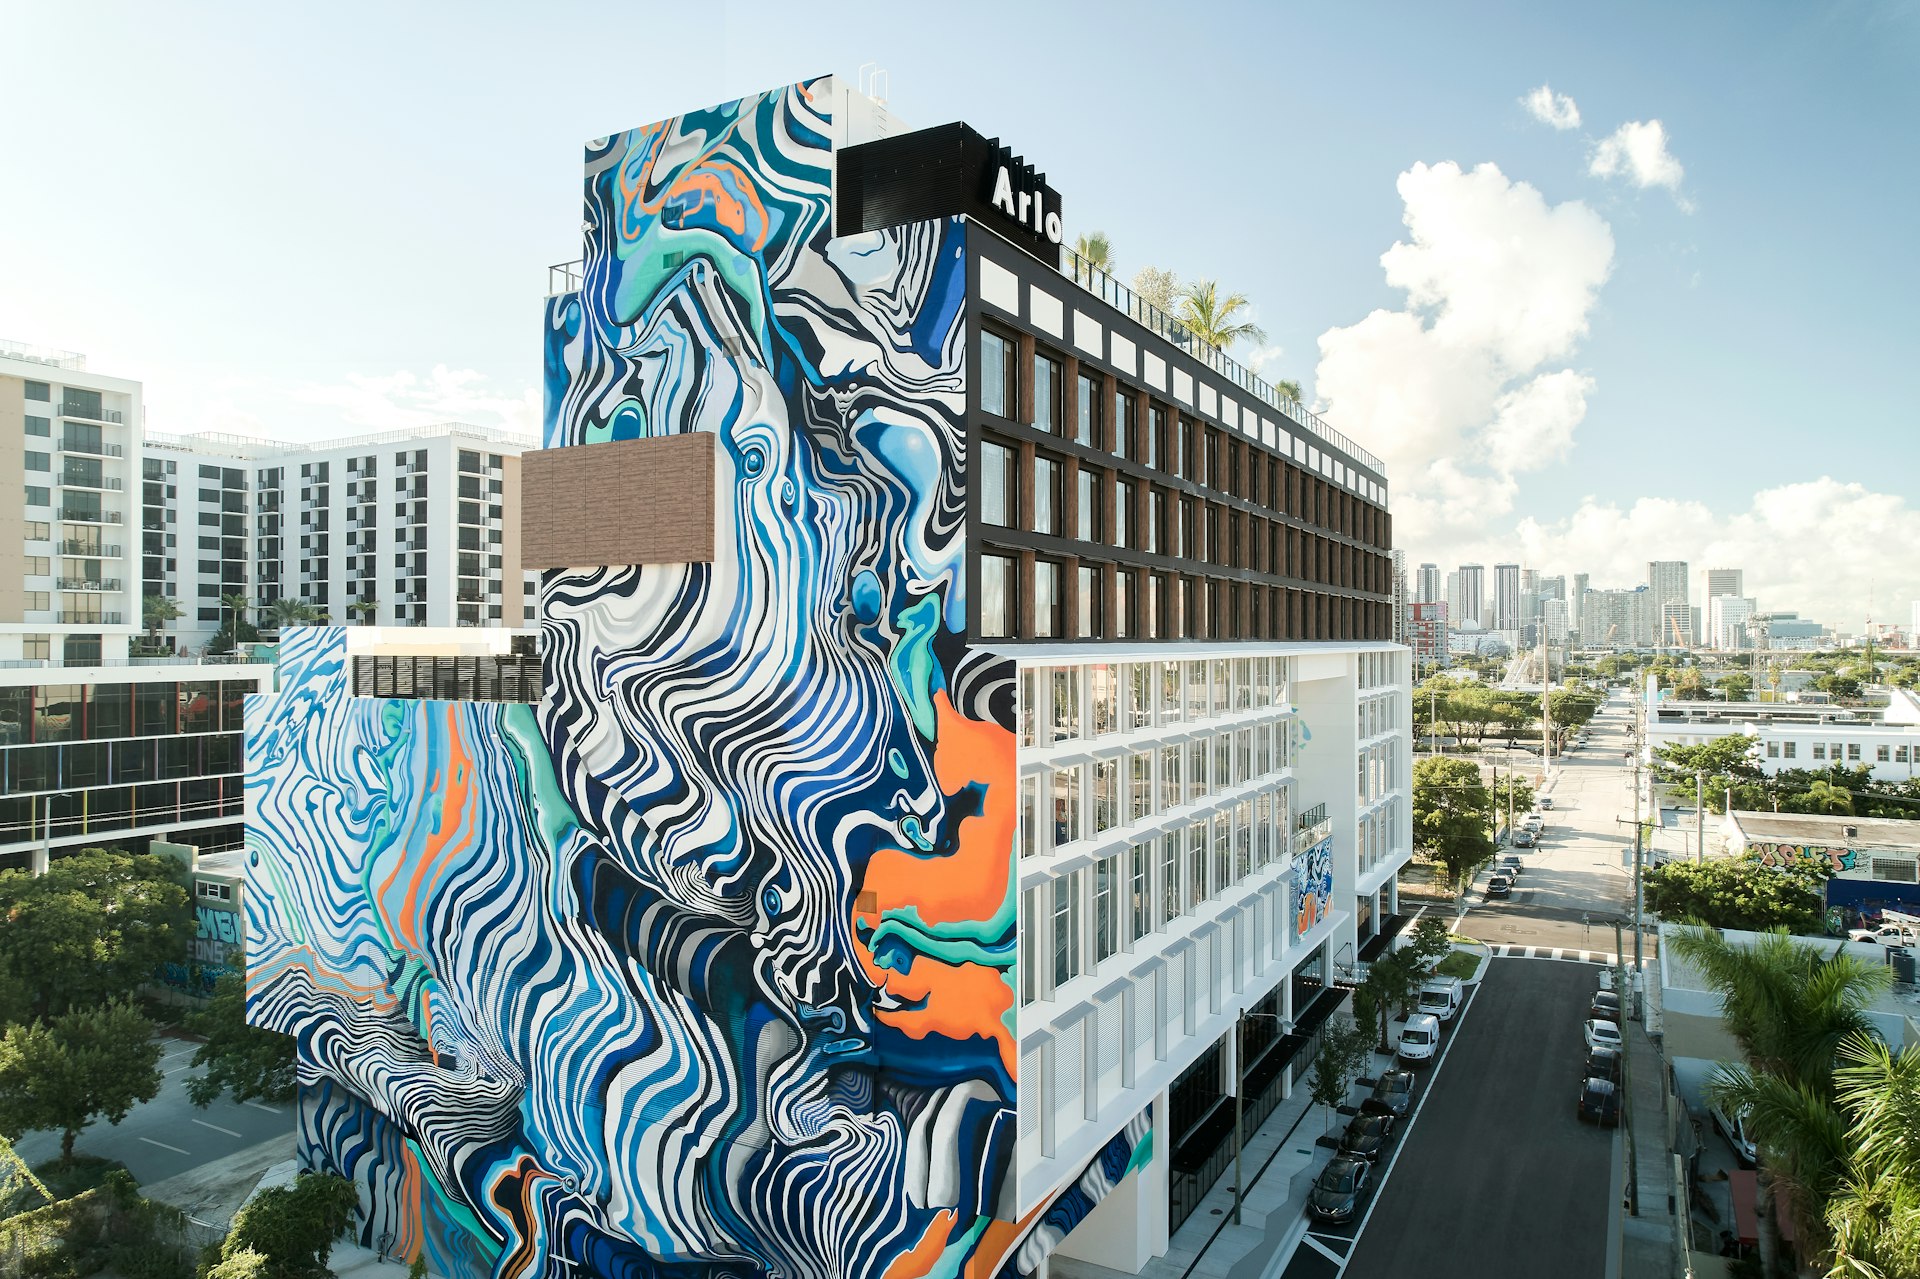 Wall mural on the Arlo Hotel in Wynwood, Miami